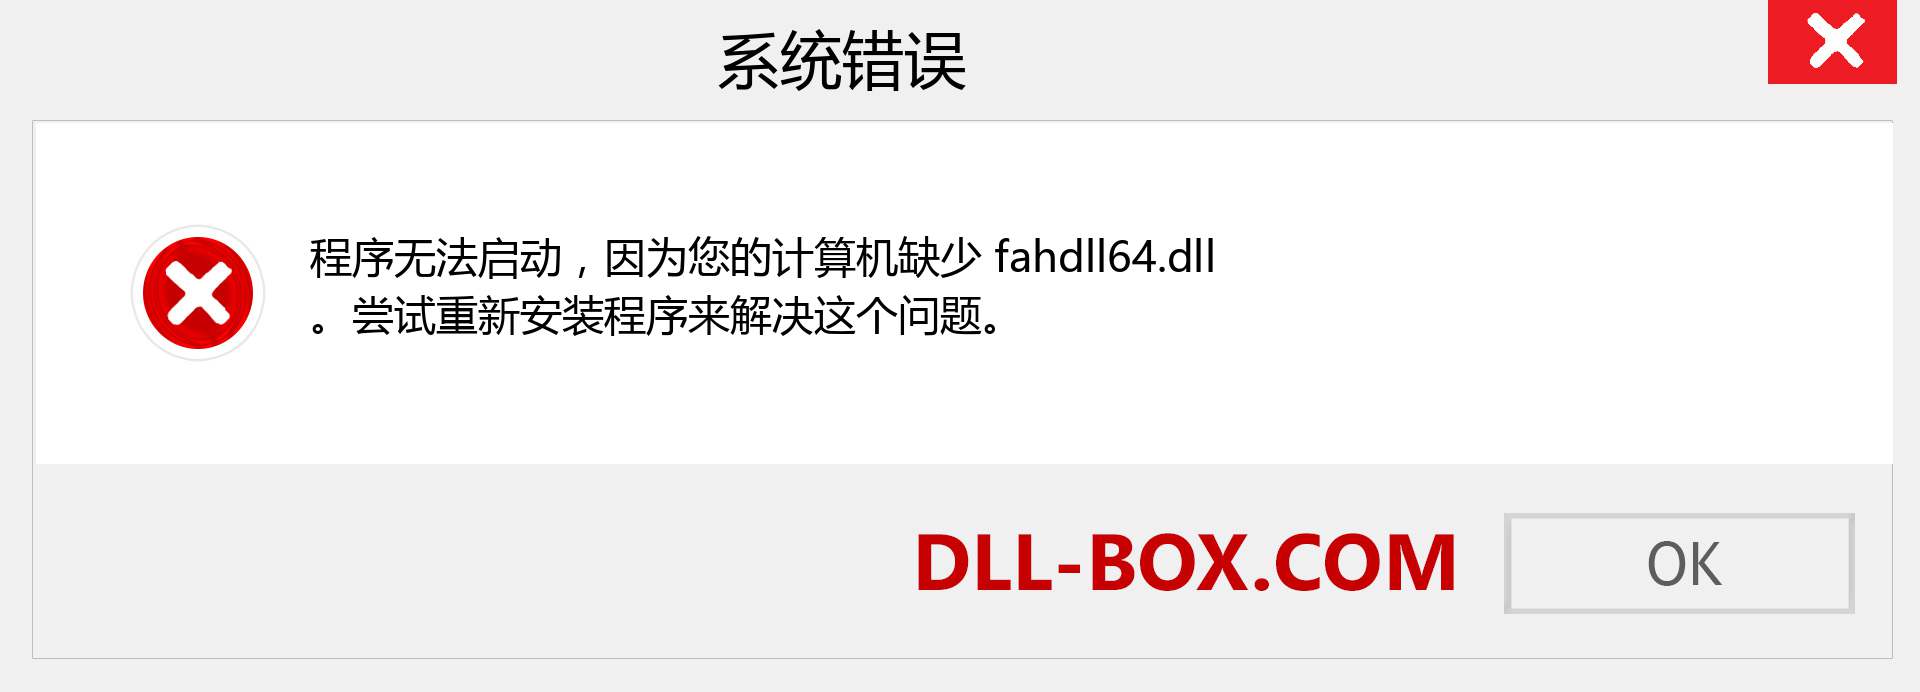 fahdll64.dll 文件丢失？。 适用于 Windows 7、8、10 的下载 - 修复 Windows、照片、图像上的 fahdll64 dll 丢失错误